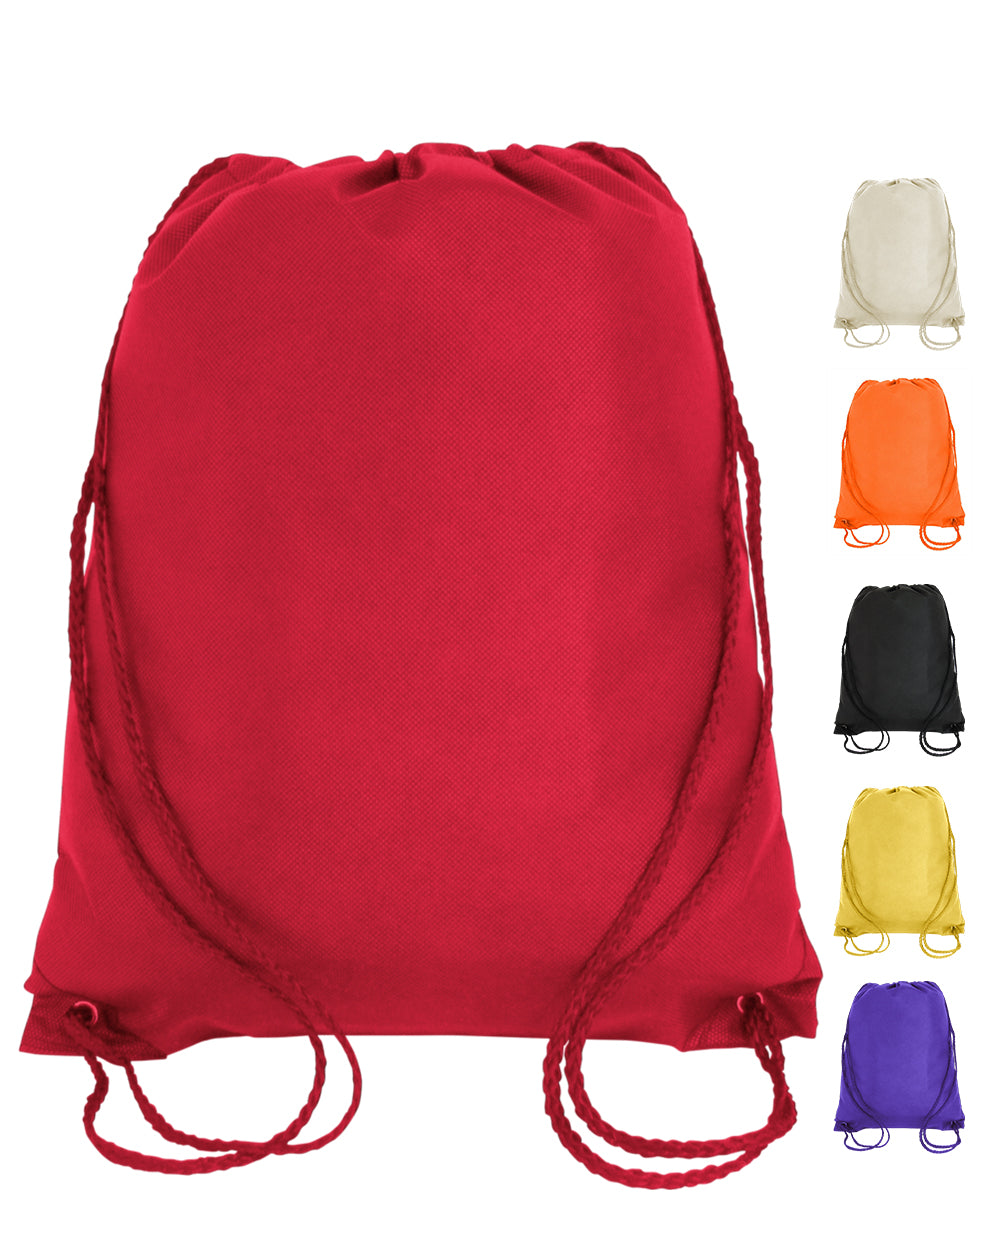 Bulk Drawstring Bags, Drawstring Backpack, Cinch Bags